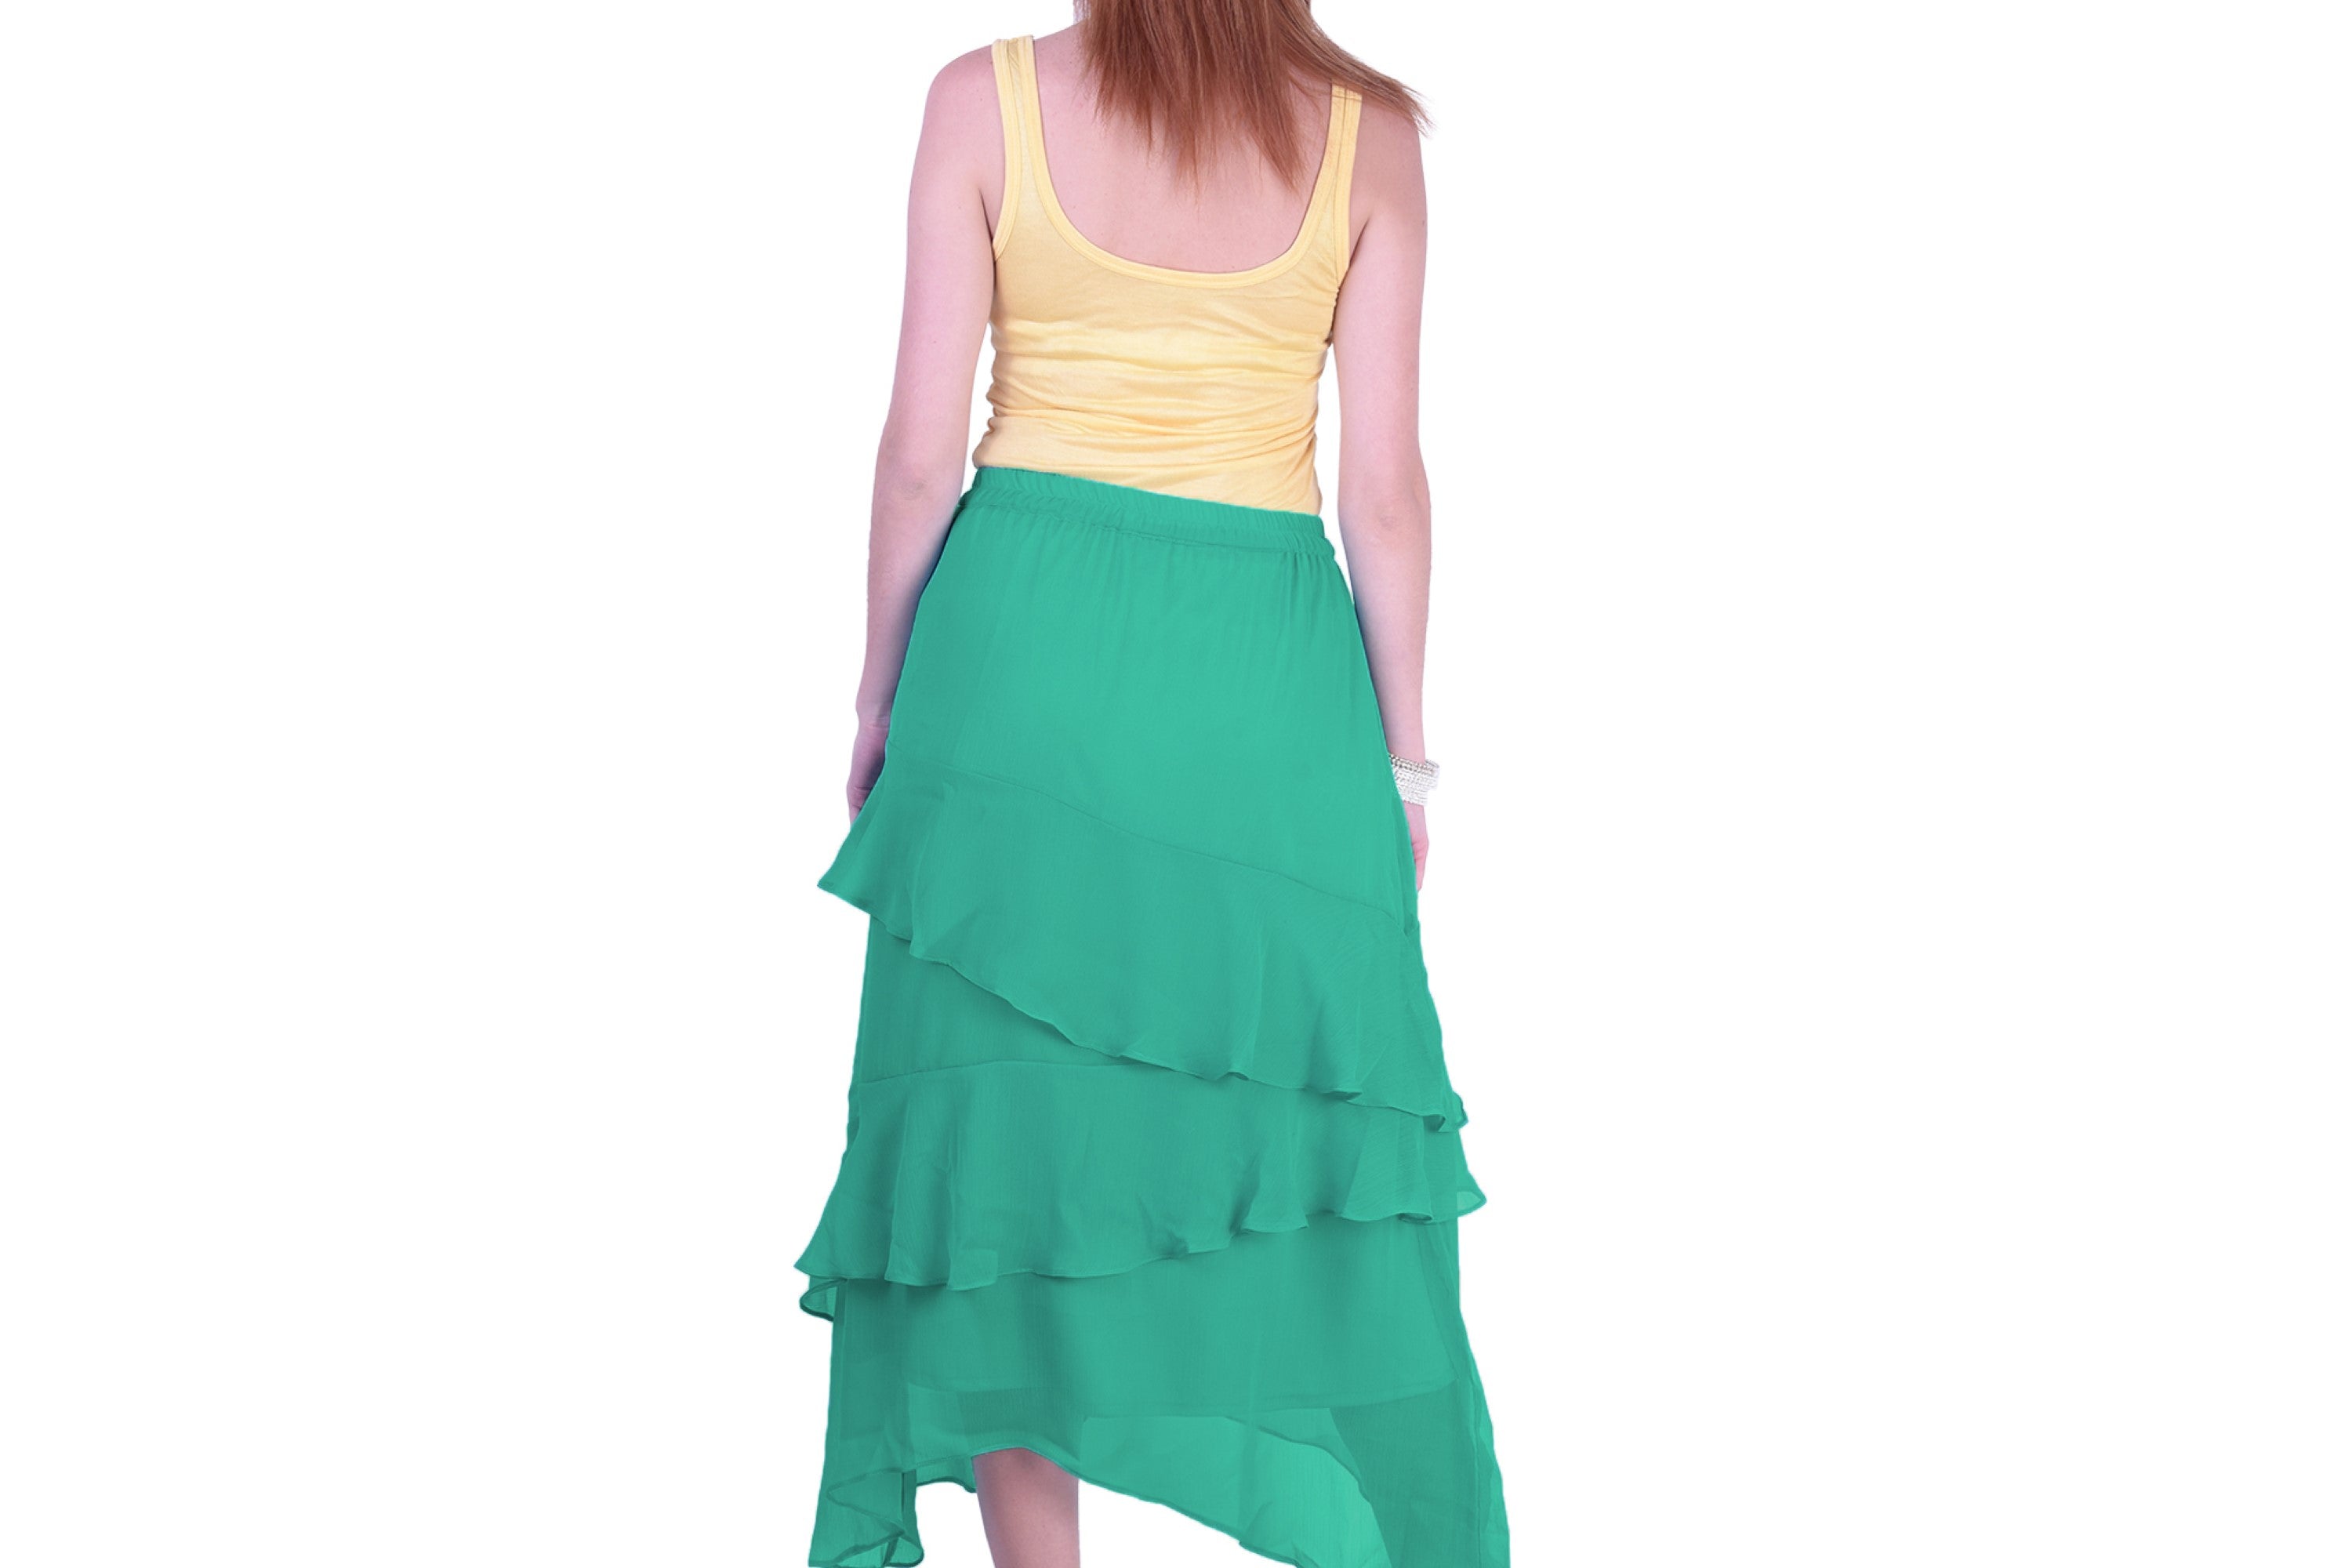 Women's Chiffon Ruffle Skirt With Elastic In Dark Green - MIRACOLOS by Ruchi